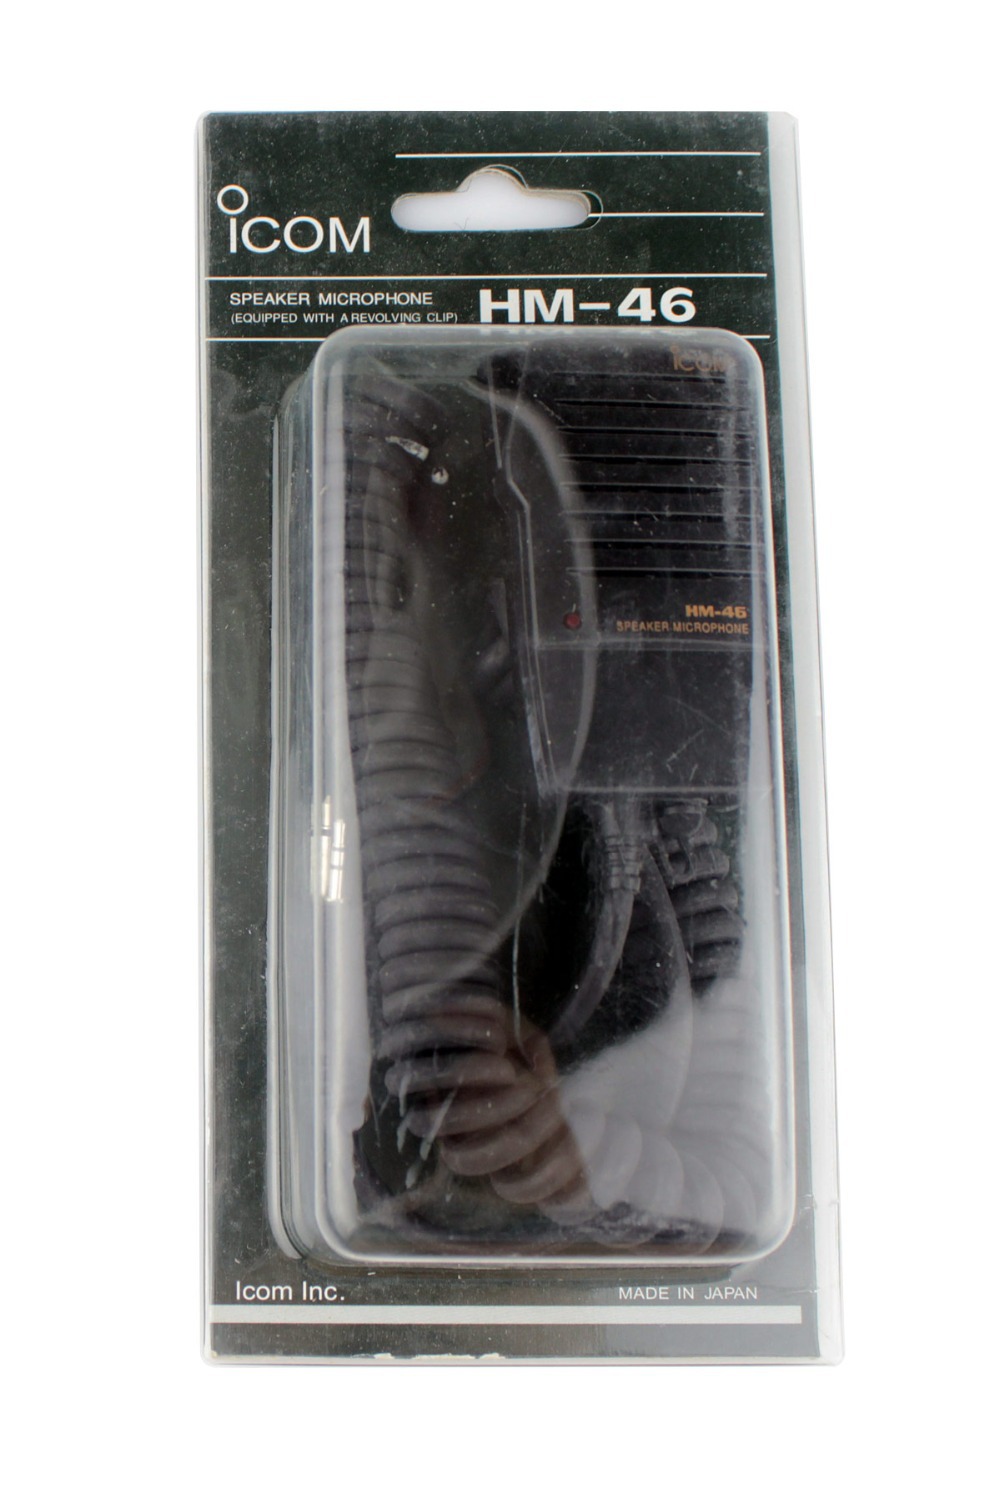  HM-46       ICOM       C507